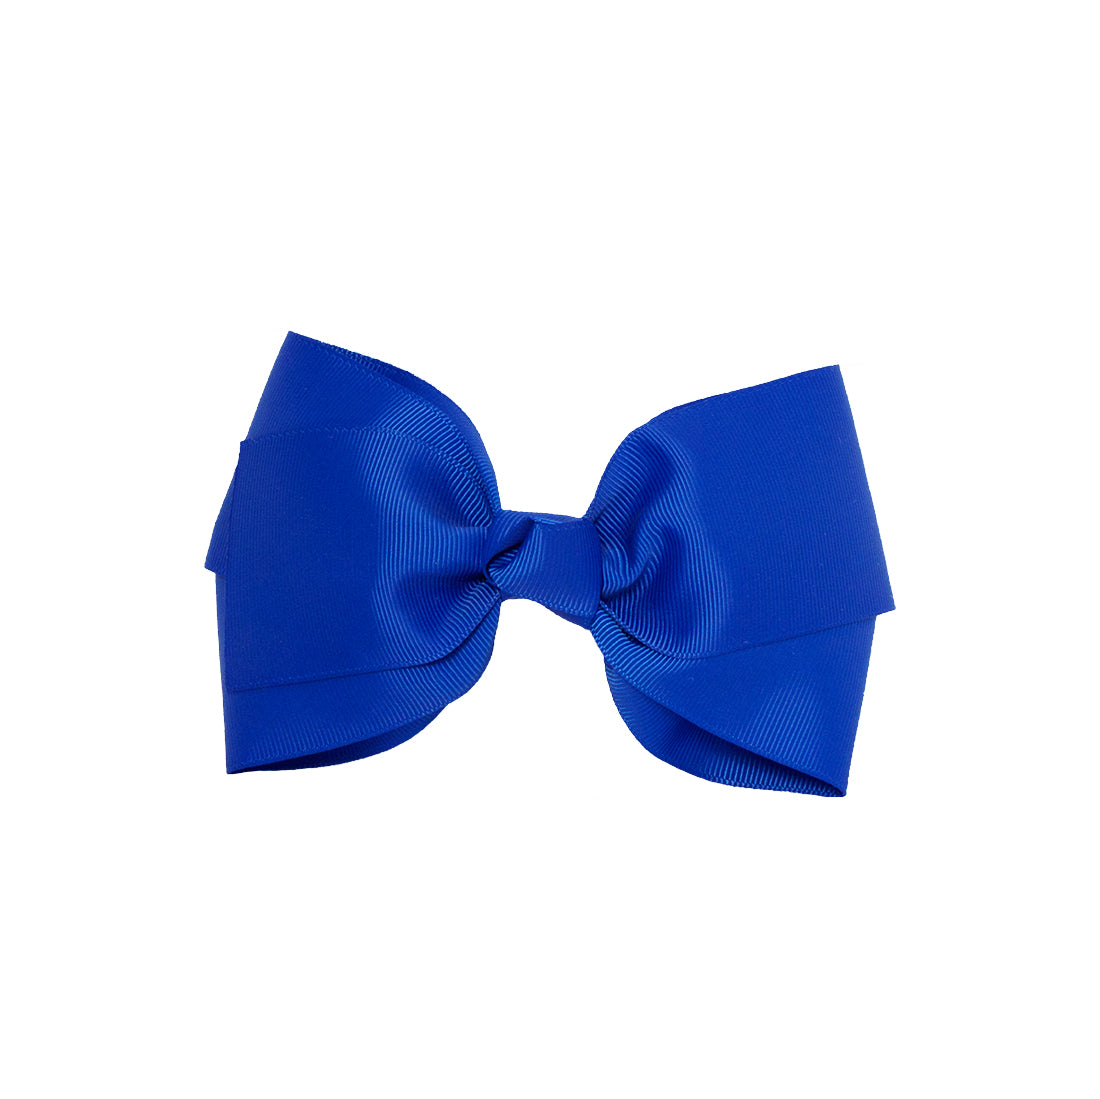 Mia® Spirit Grosgrain Ribbon Bow Barrette - large size - royal blue color - front view - designed by #MiaKaminski of Mia Beauty